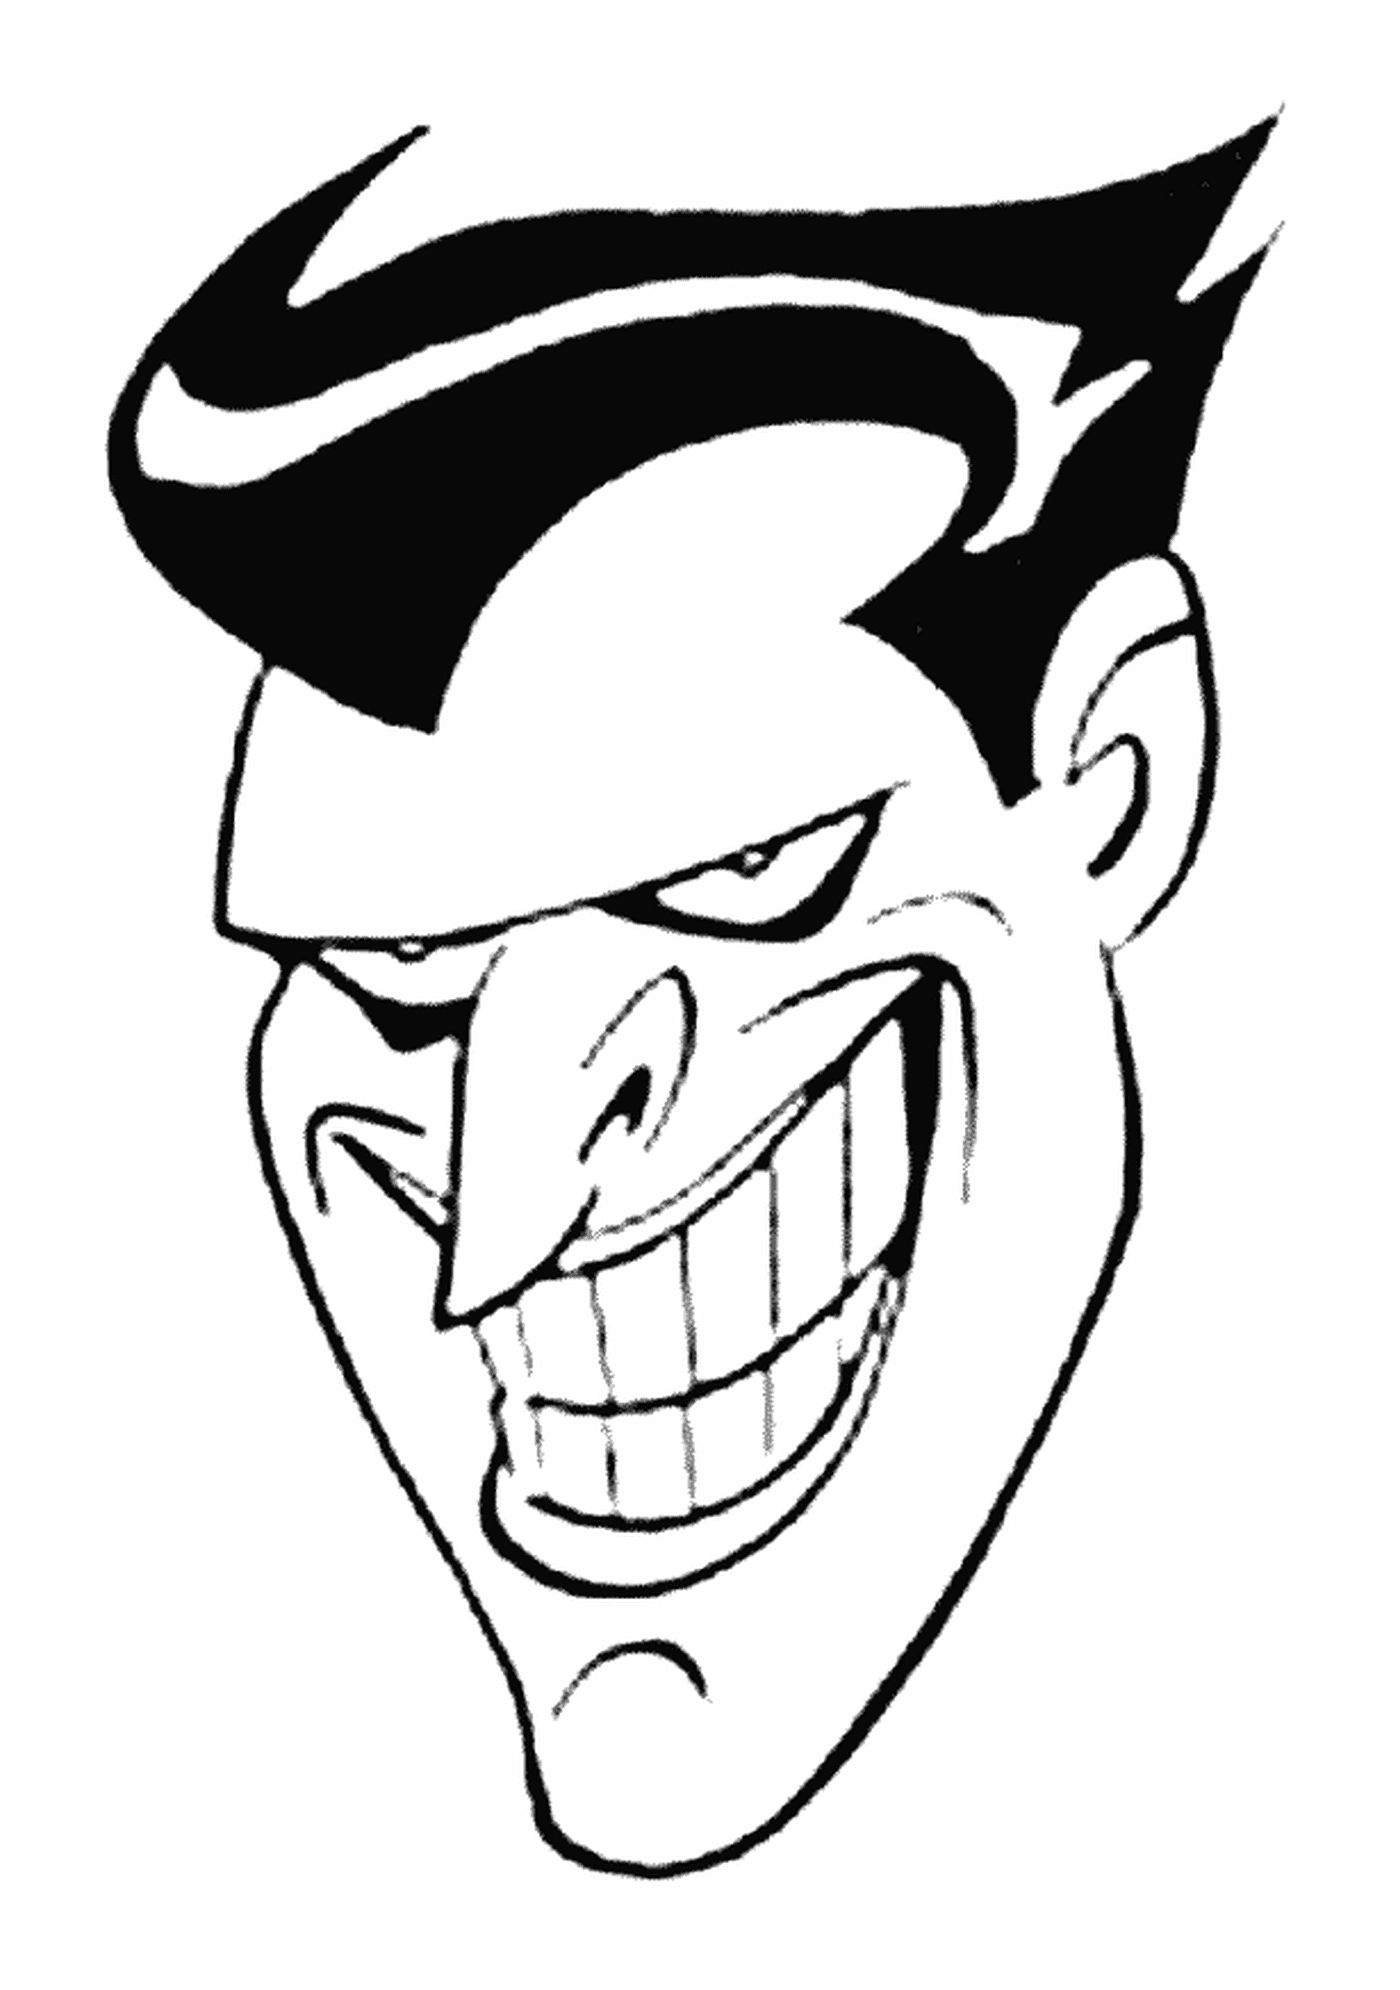  The head of Batman's Joker, the animated series 